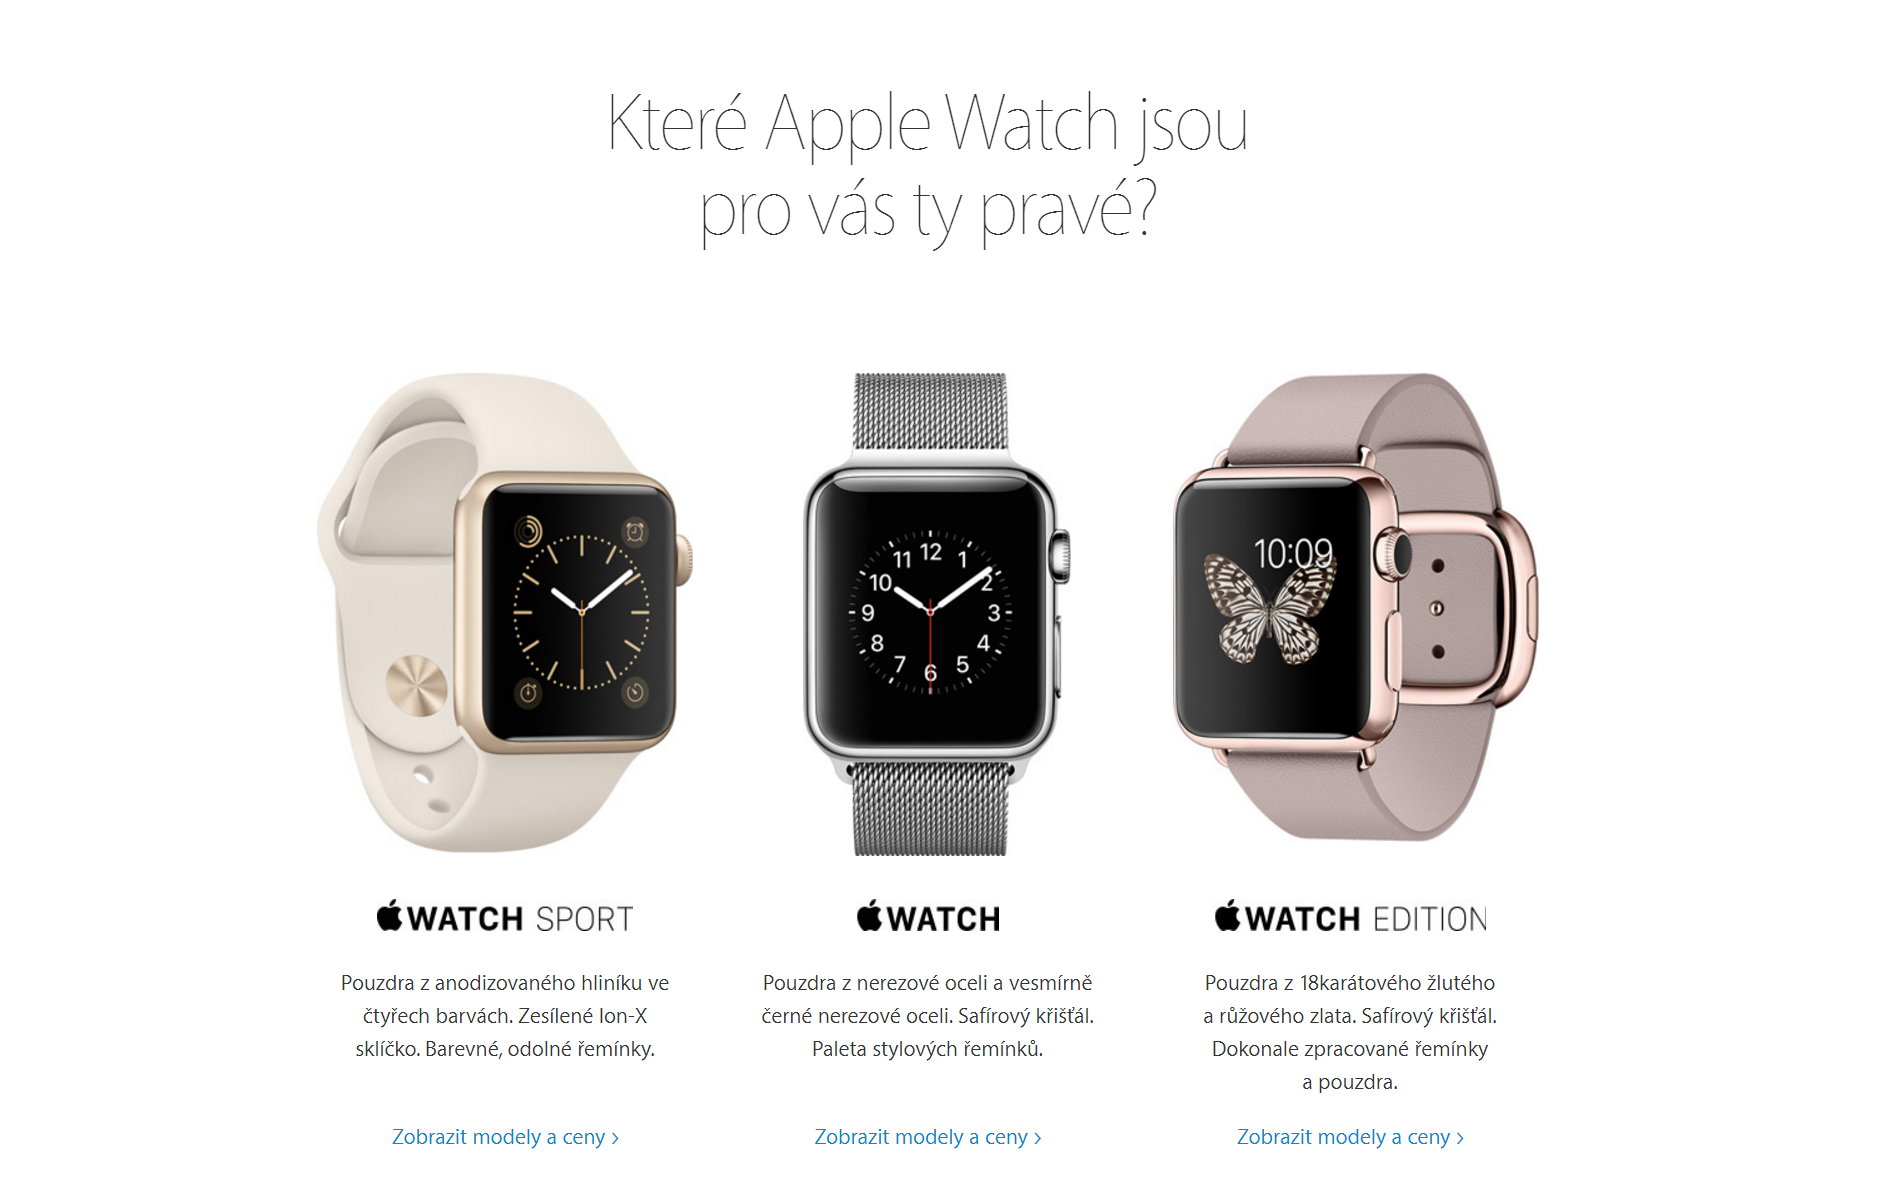 Версии часов apple watch. Часы эпл 6 цвета. Эппл вотч се цвета корпуса. Часы эпл вотч се. Часы эпл вотч цвета.